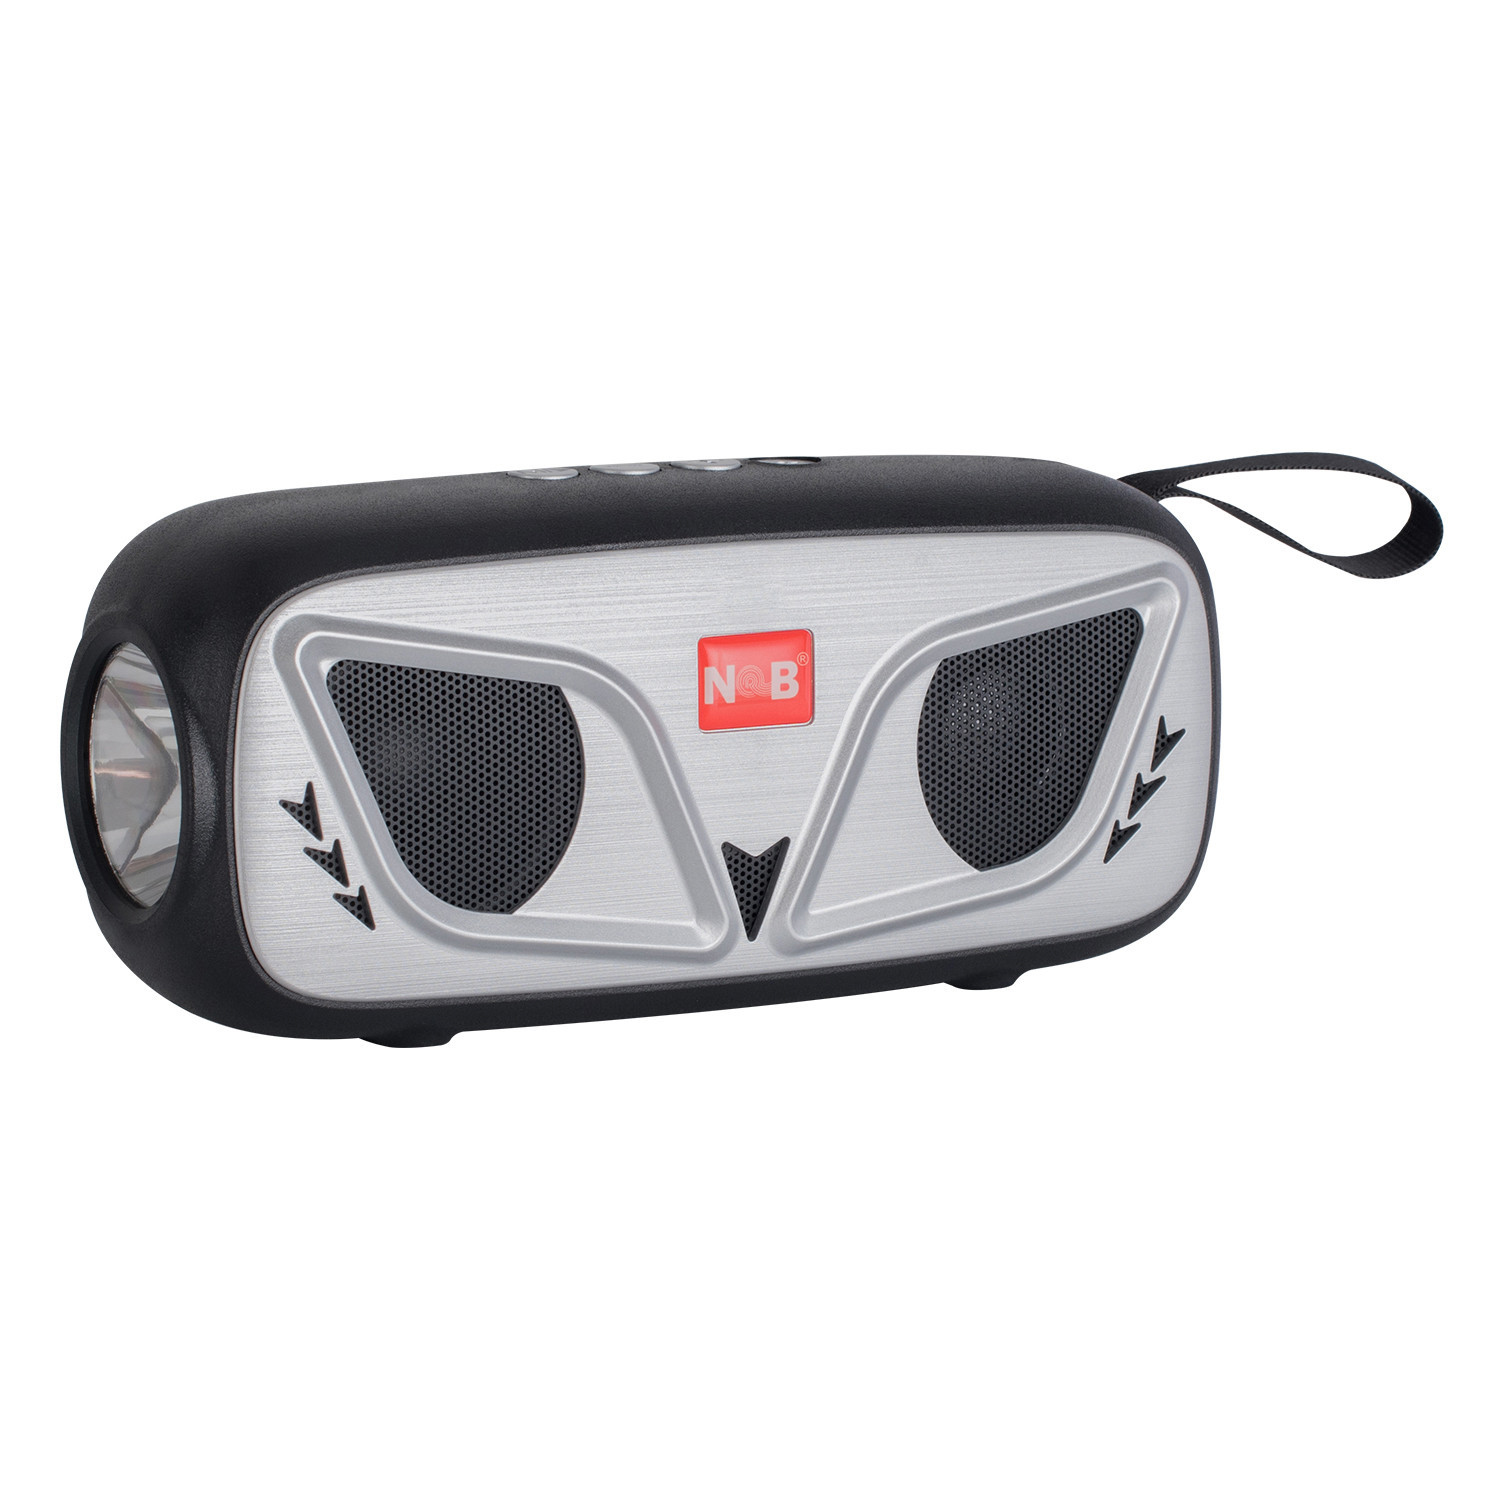 ''Owl Outdoor Compact Wireless FM Radio Bluetooth Speaker Flashlight, SOLAR Power NB306 for Universal